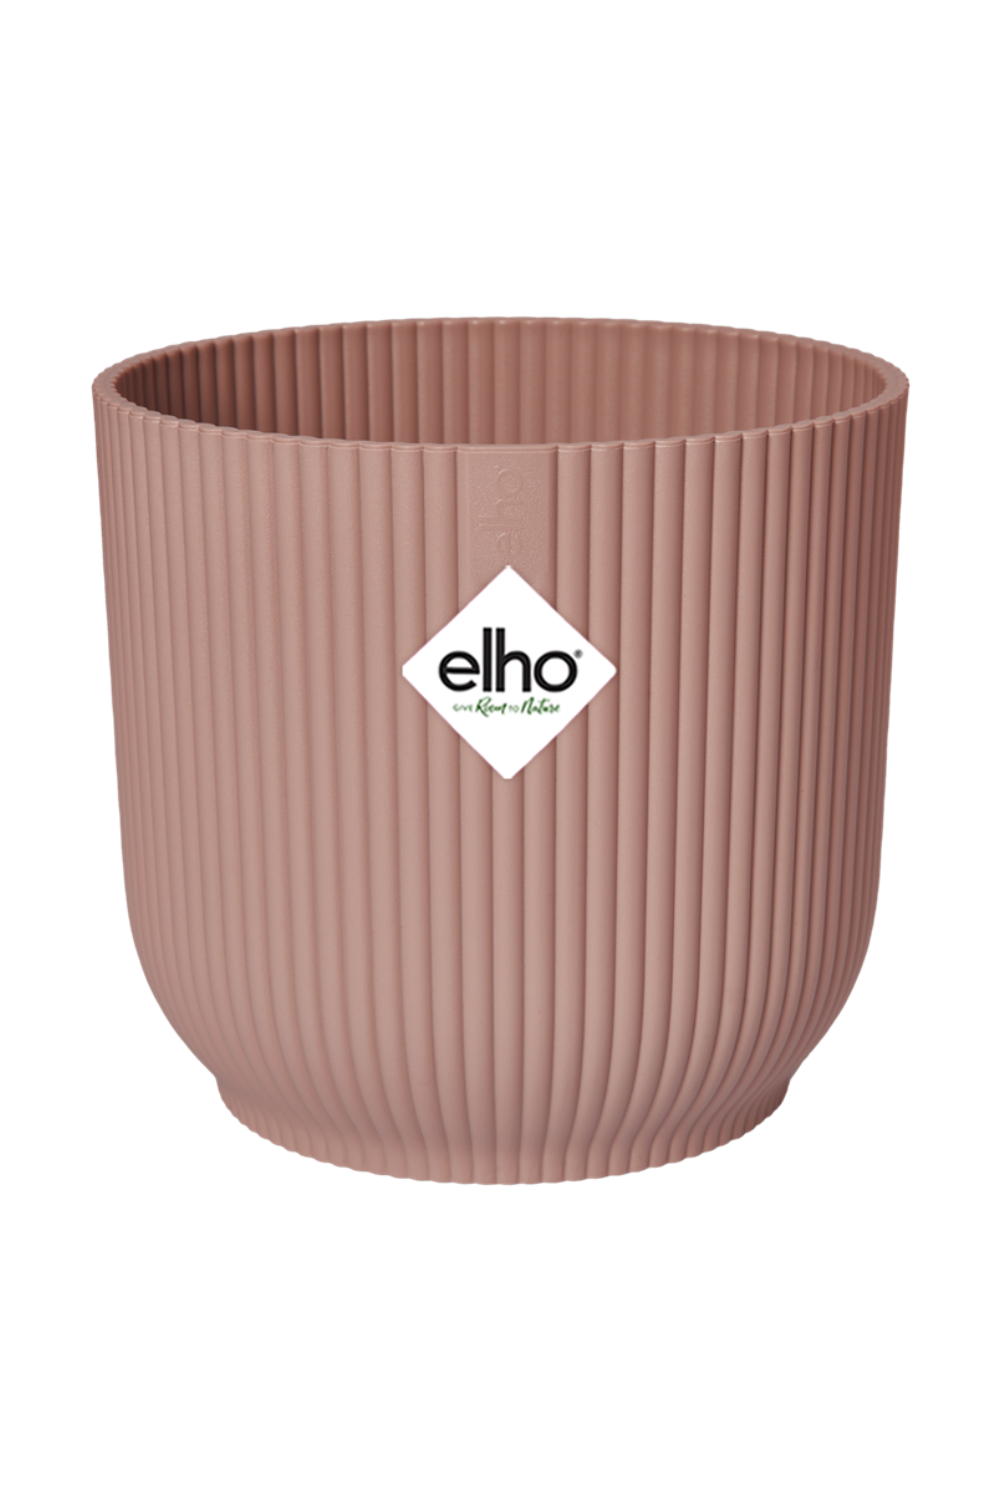 Blumentopf Elho Vibes Fold rund Delicate Pink 16cm